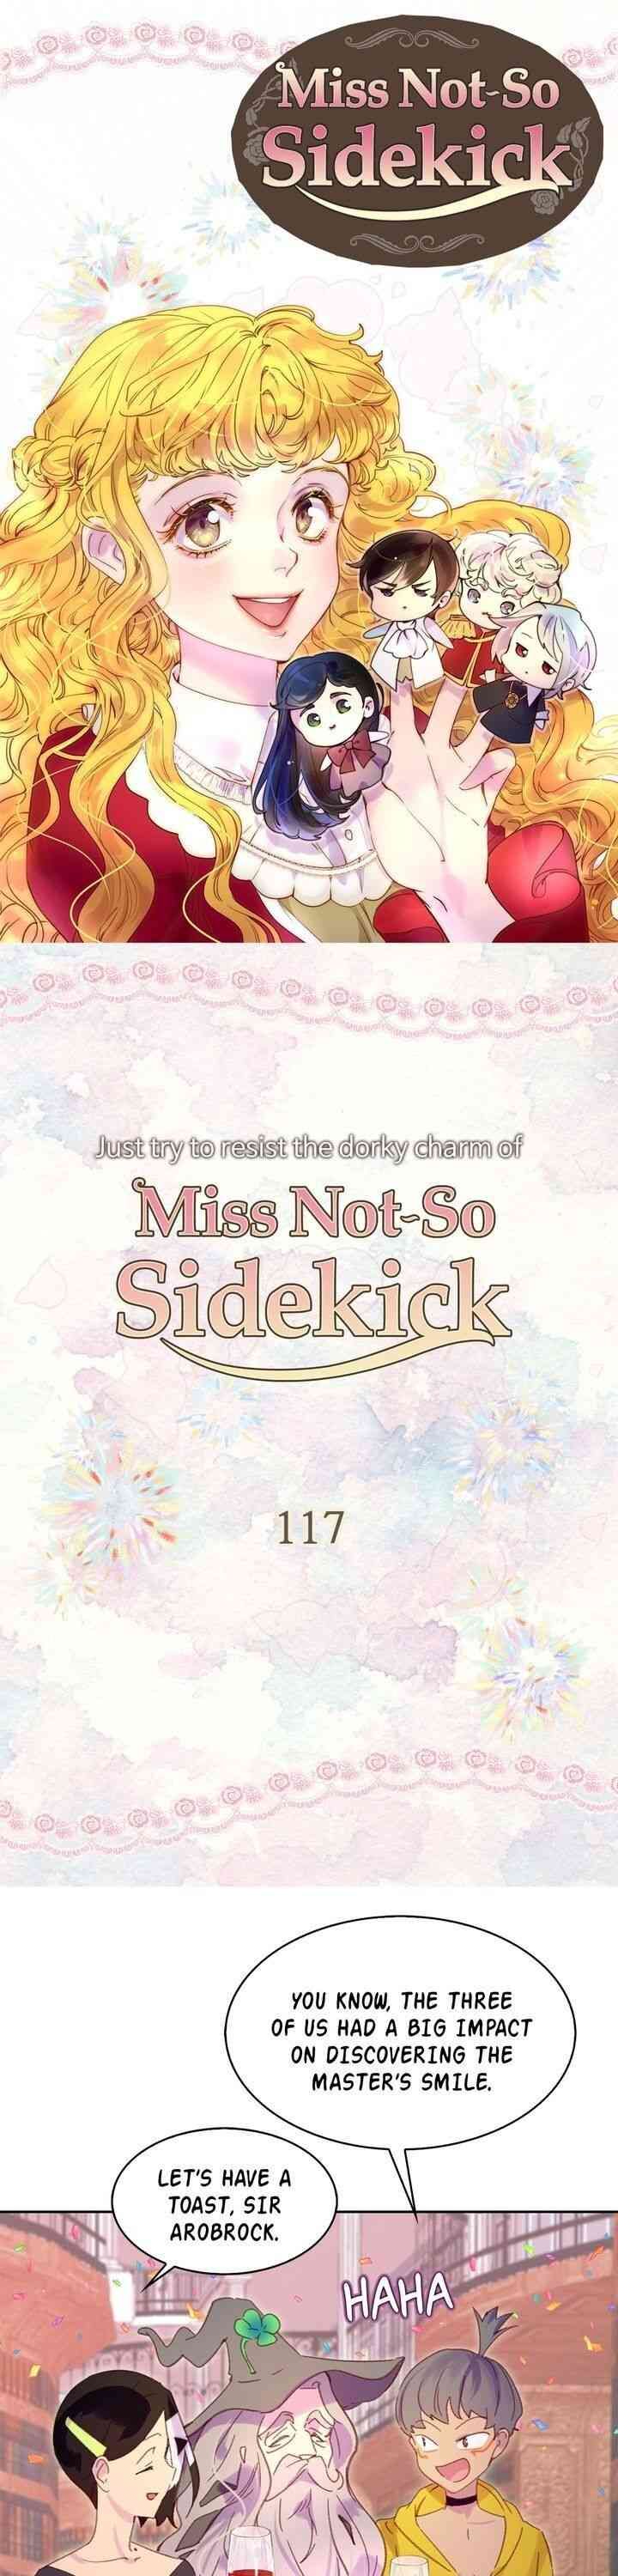 Miss Not-So Sidekick Chapter 117 page 1